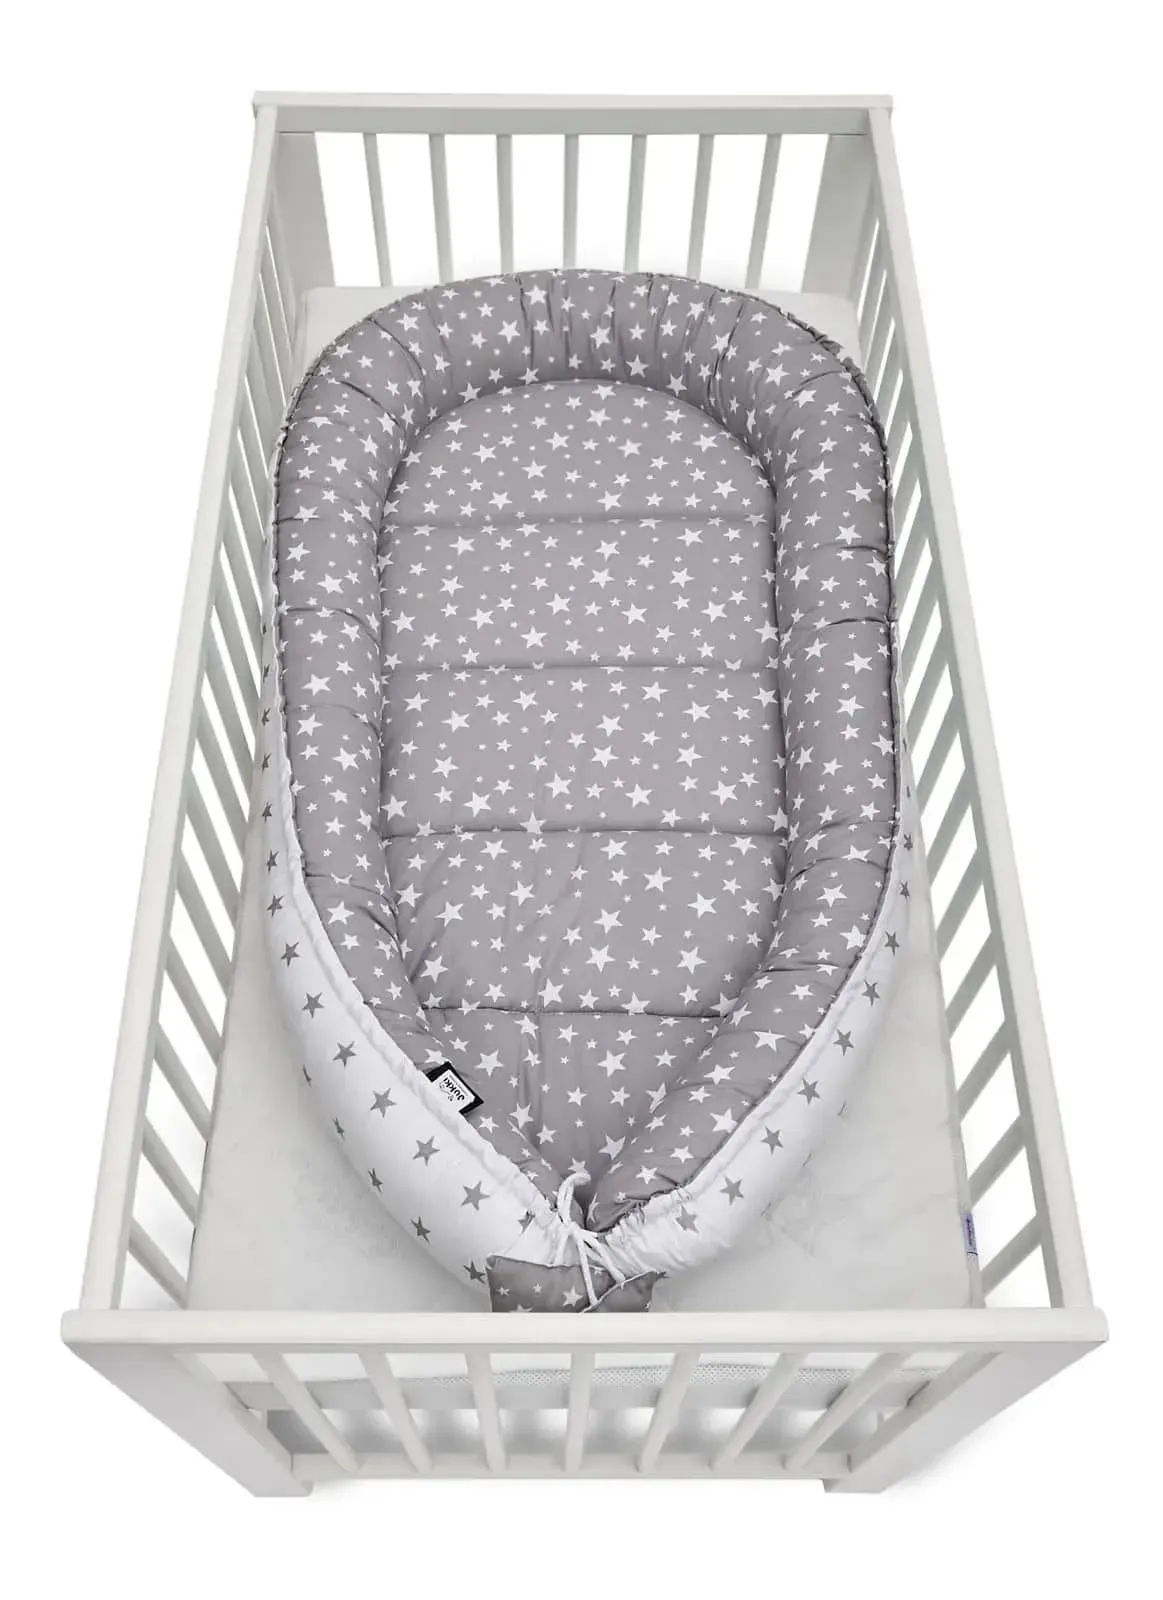 Elegant grey stars baby nest cocoon inside the crib.